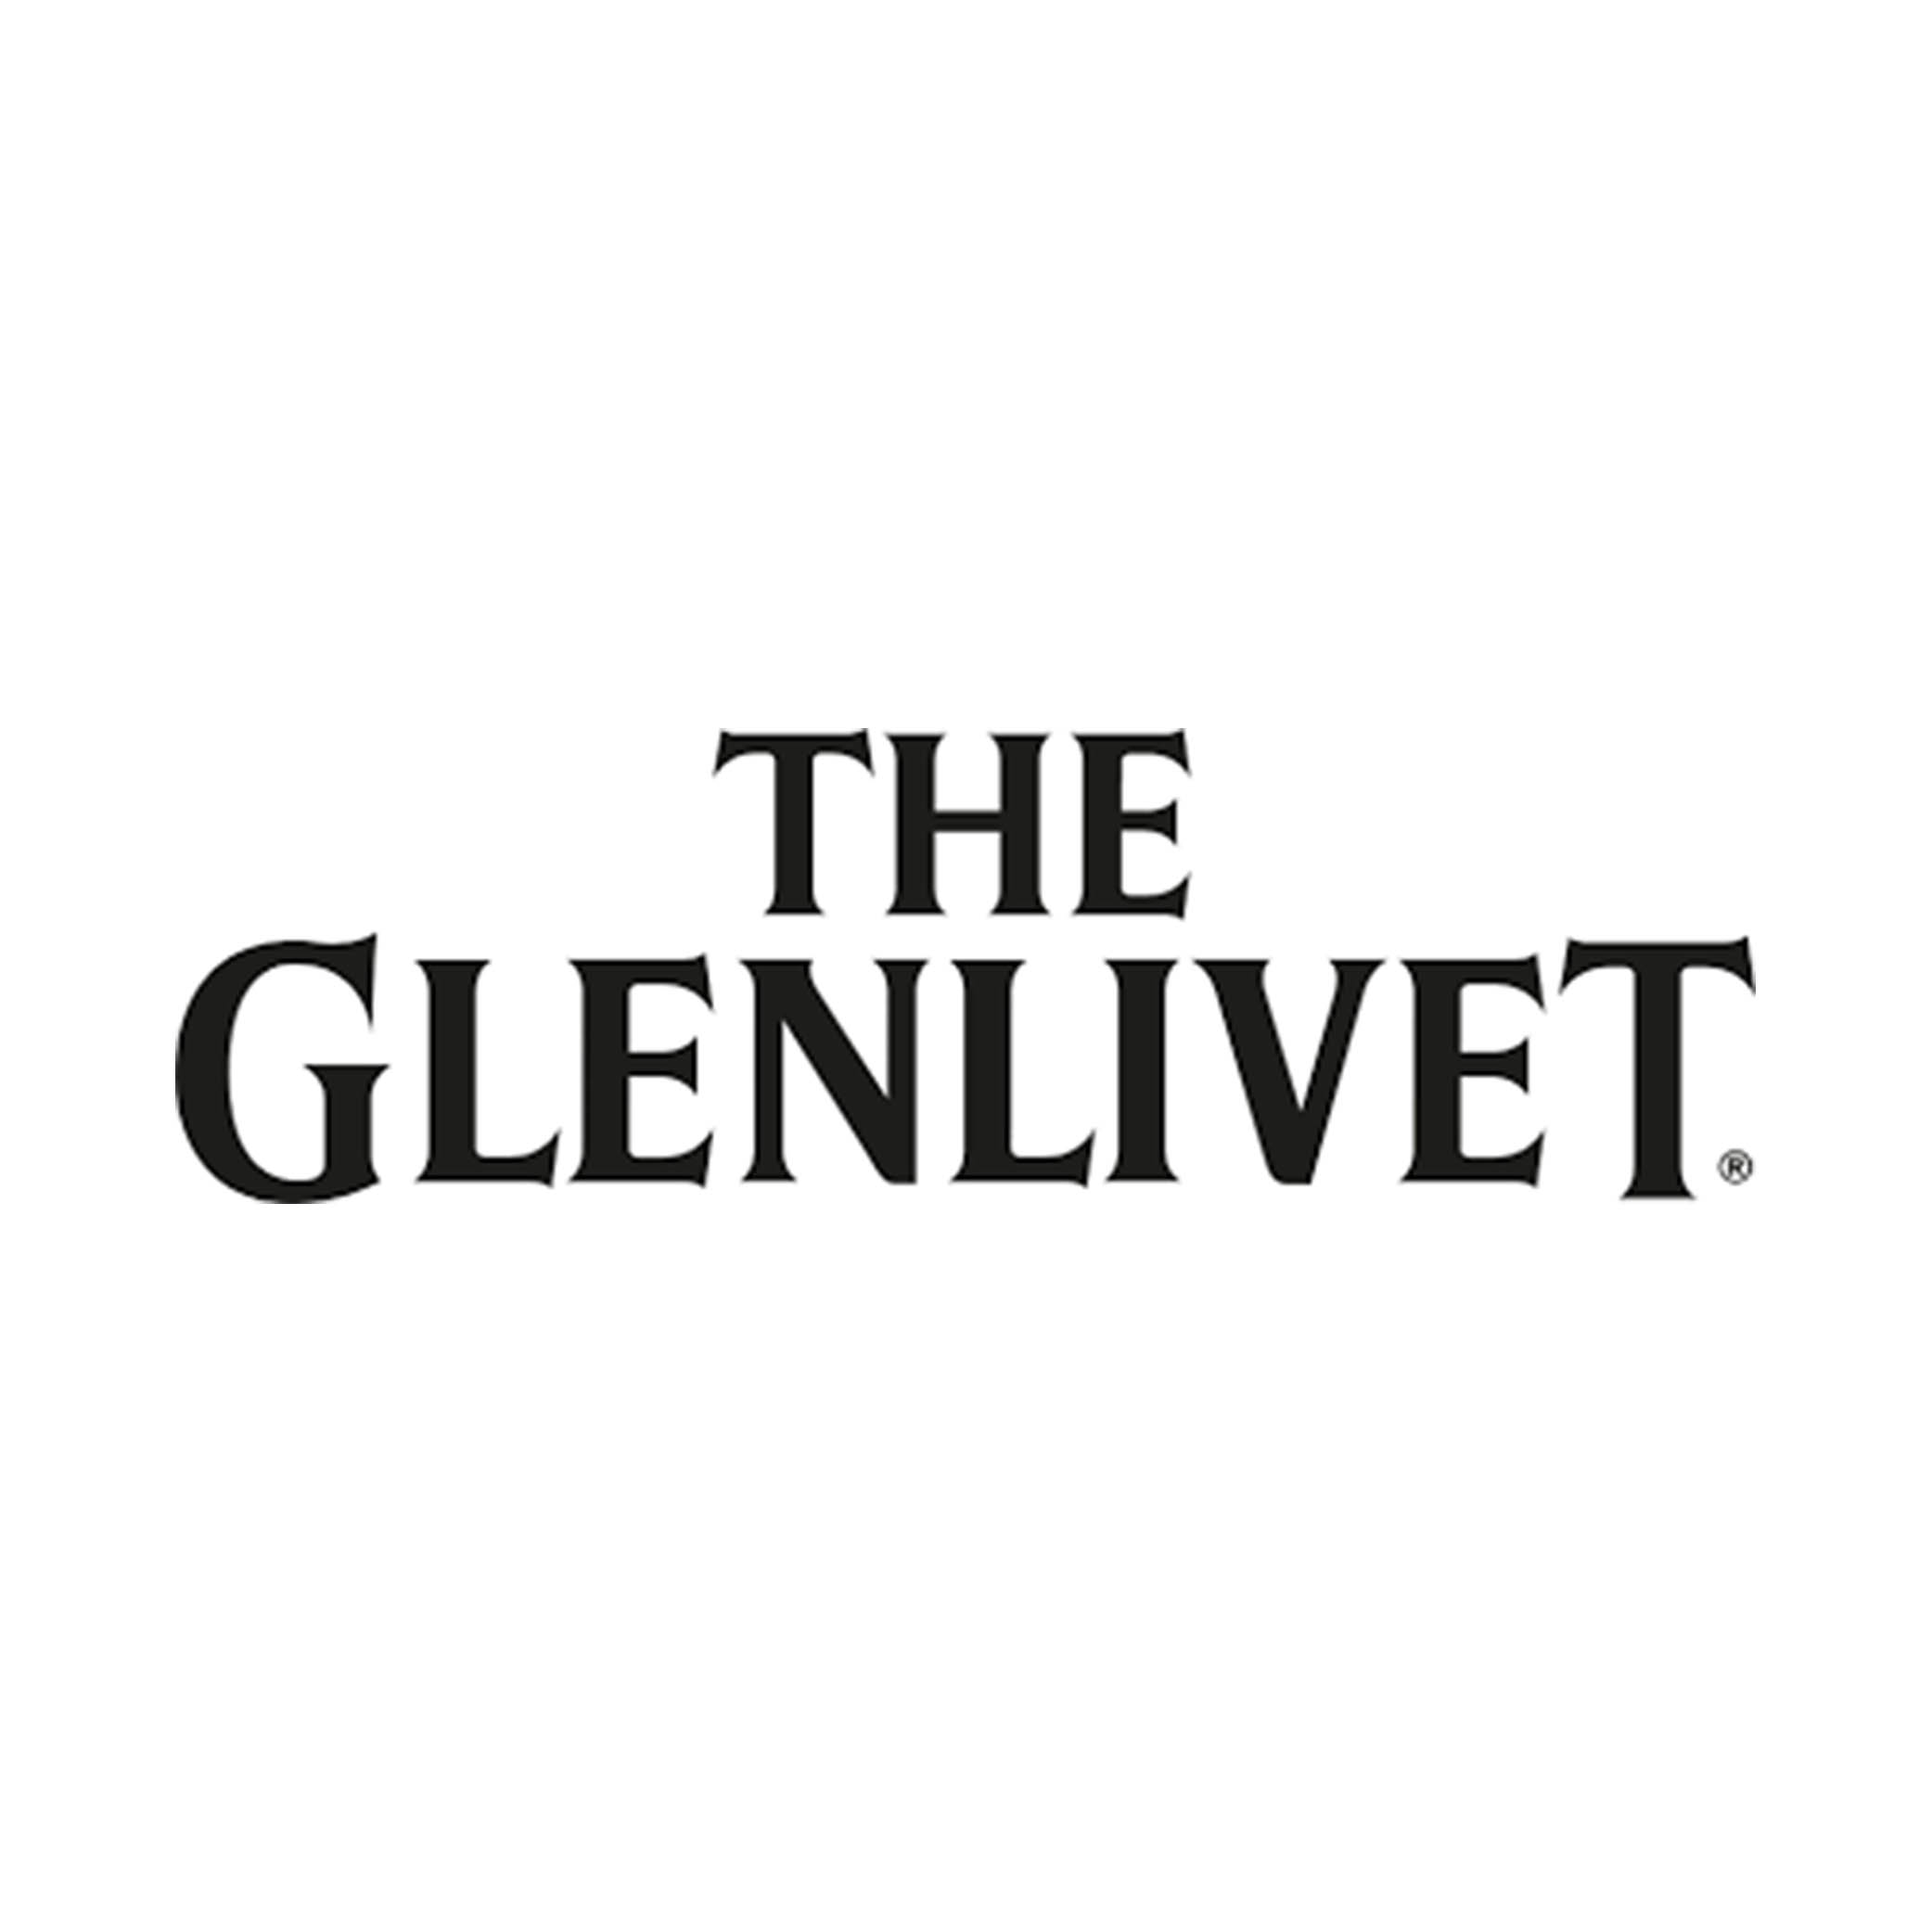 Pancaniaga Indoperkasa - The Glenlivet